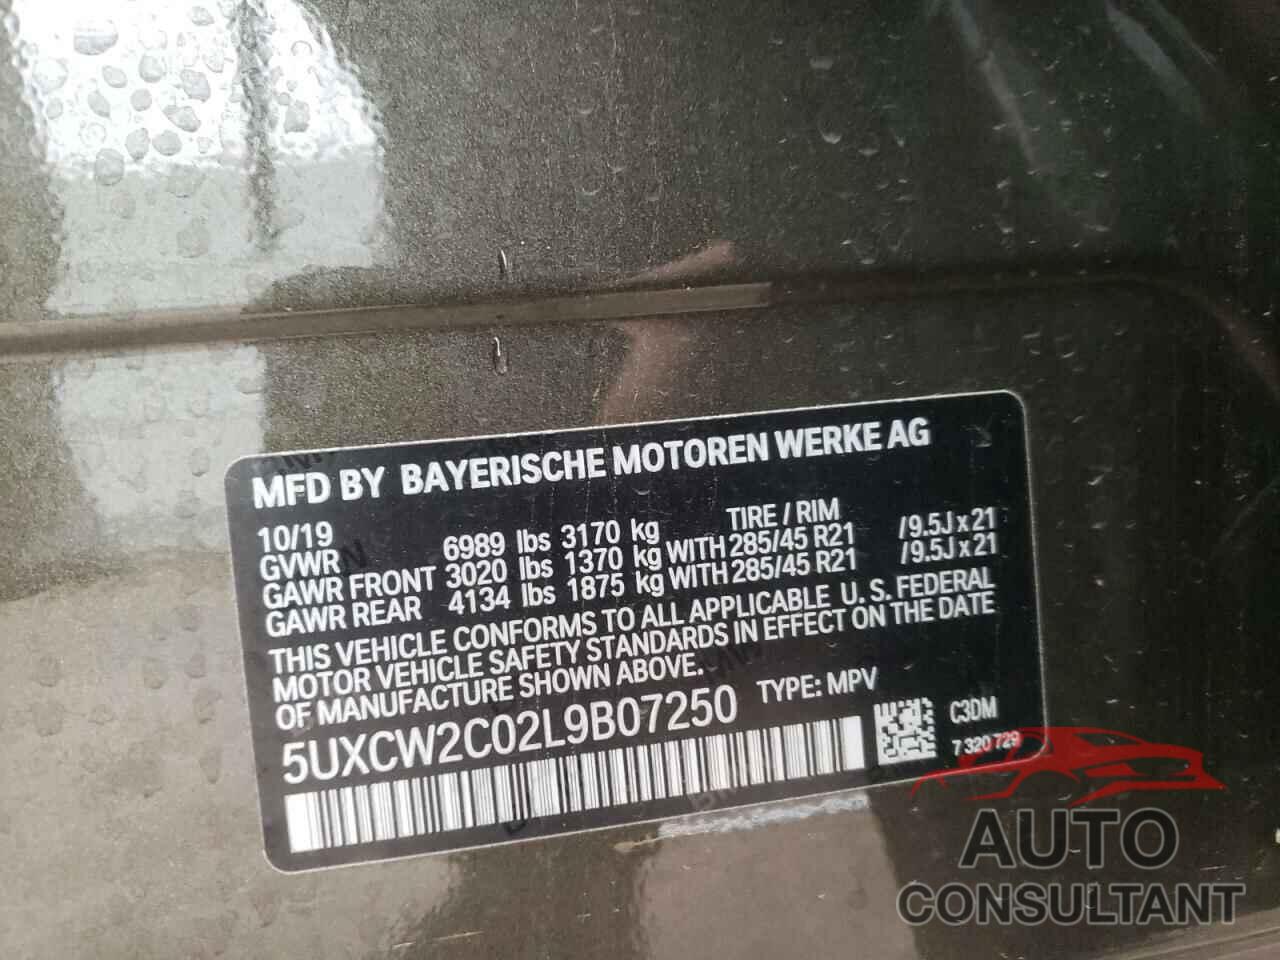 BMW X7 2020 - 5UXCW2C02L9B07250